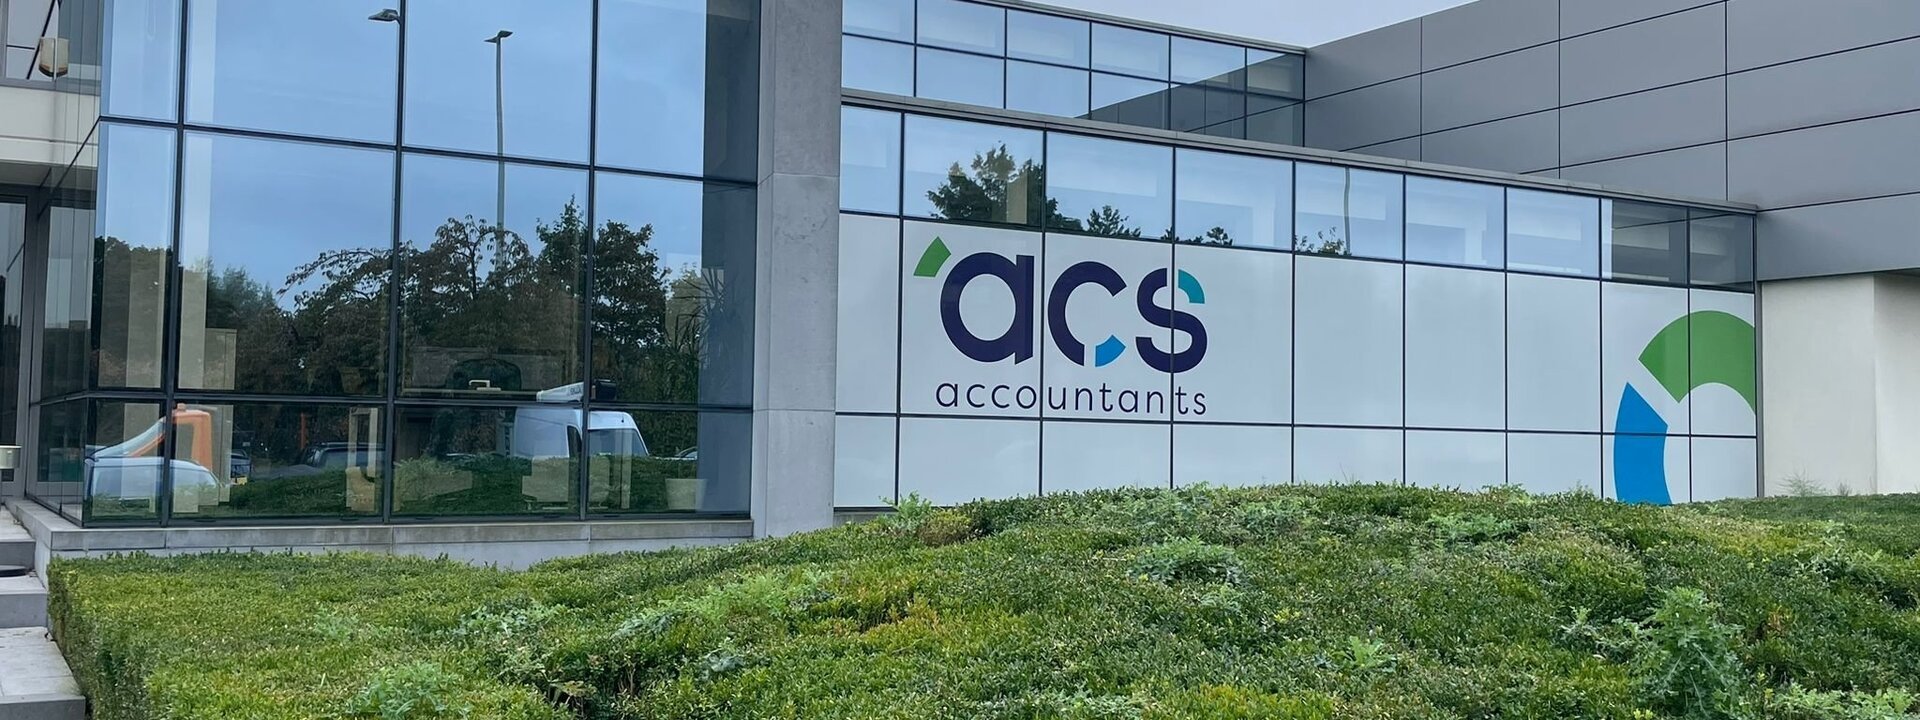 Acs Accountants Turnhout